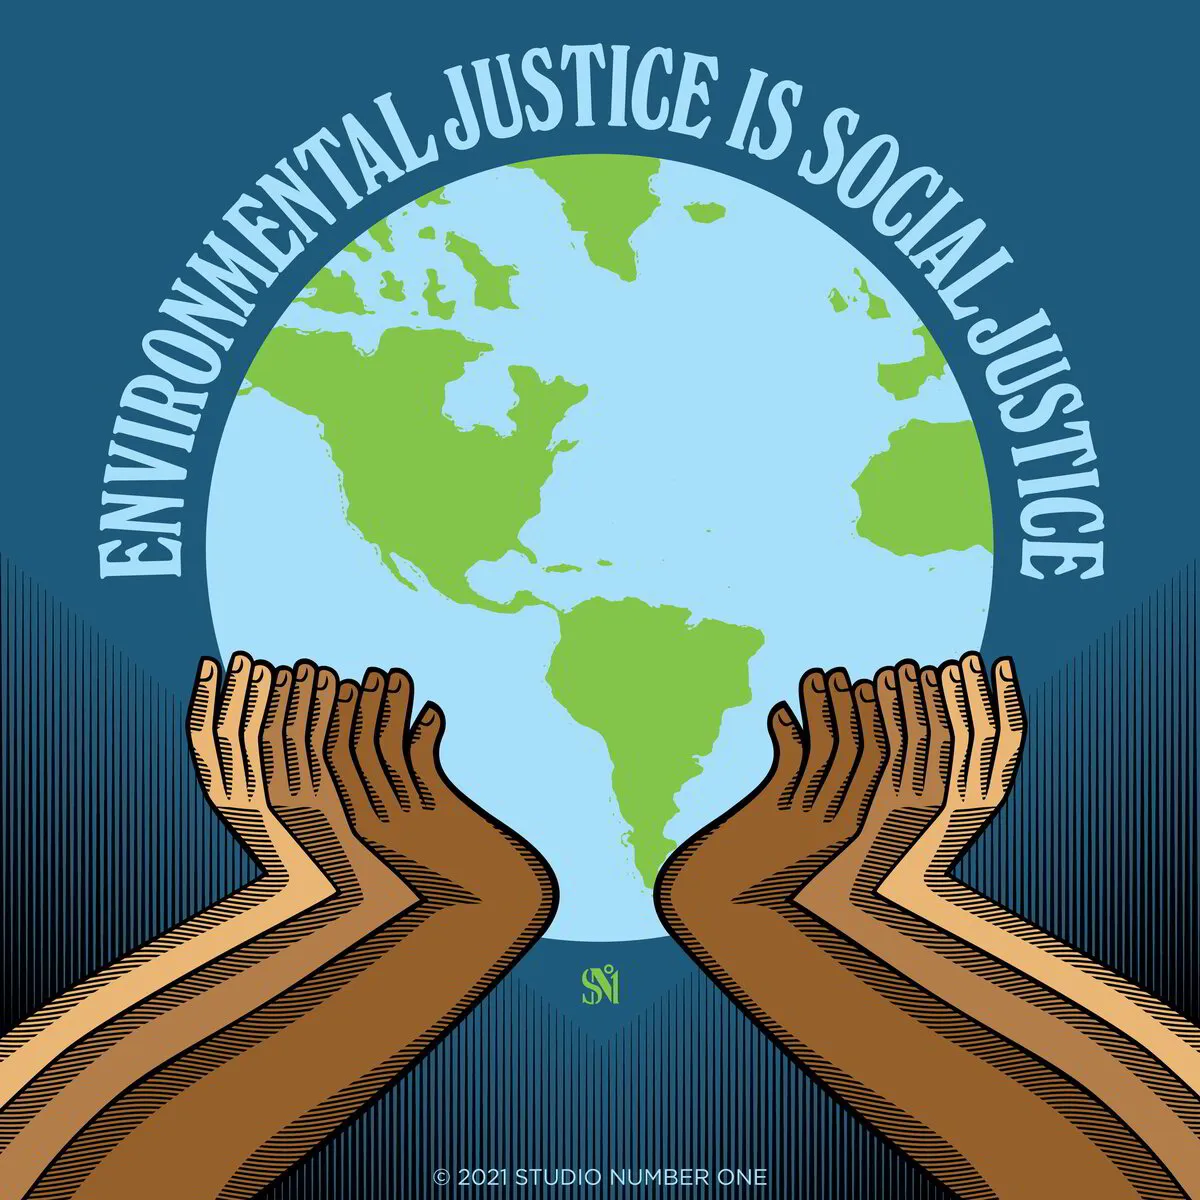 Centering Environmental Justice